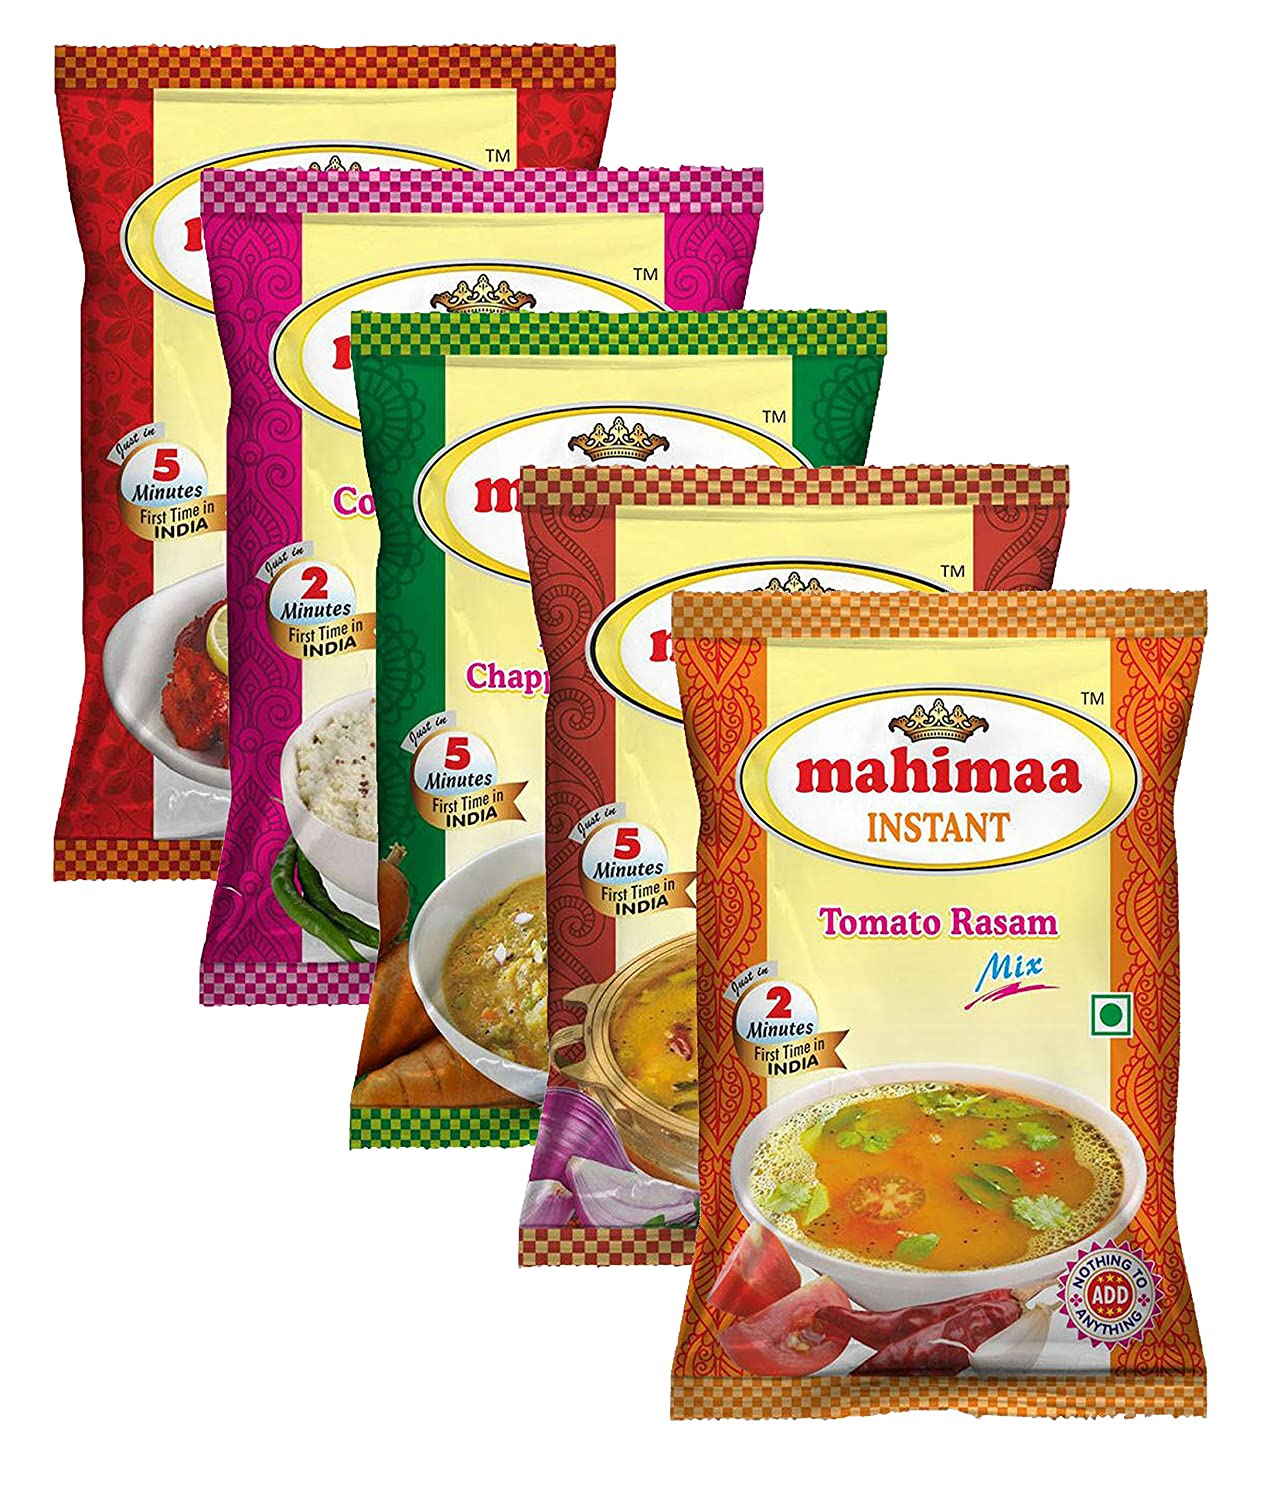 Mahimaa Instant Chilli 65 Mix, Coconut Chutney Mix,Idly, Dosa, Chappathi and Parotta Kuruma Mix and Sambar Mix, Tomato Rasam Mix, Size- 50g, Pack of 5